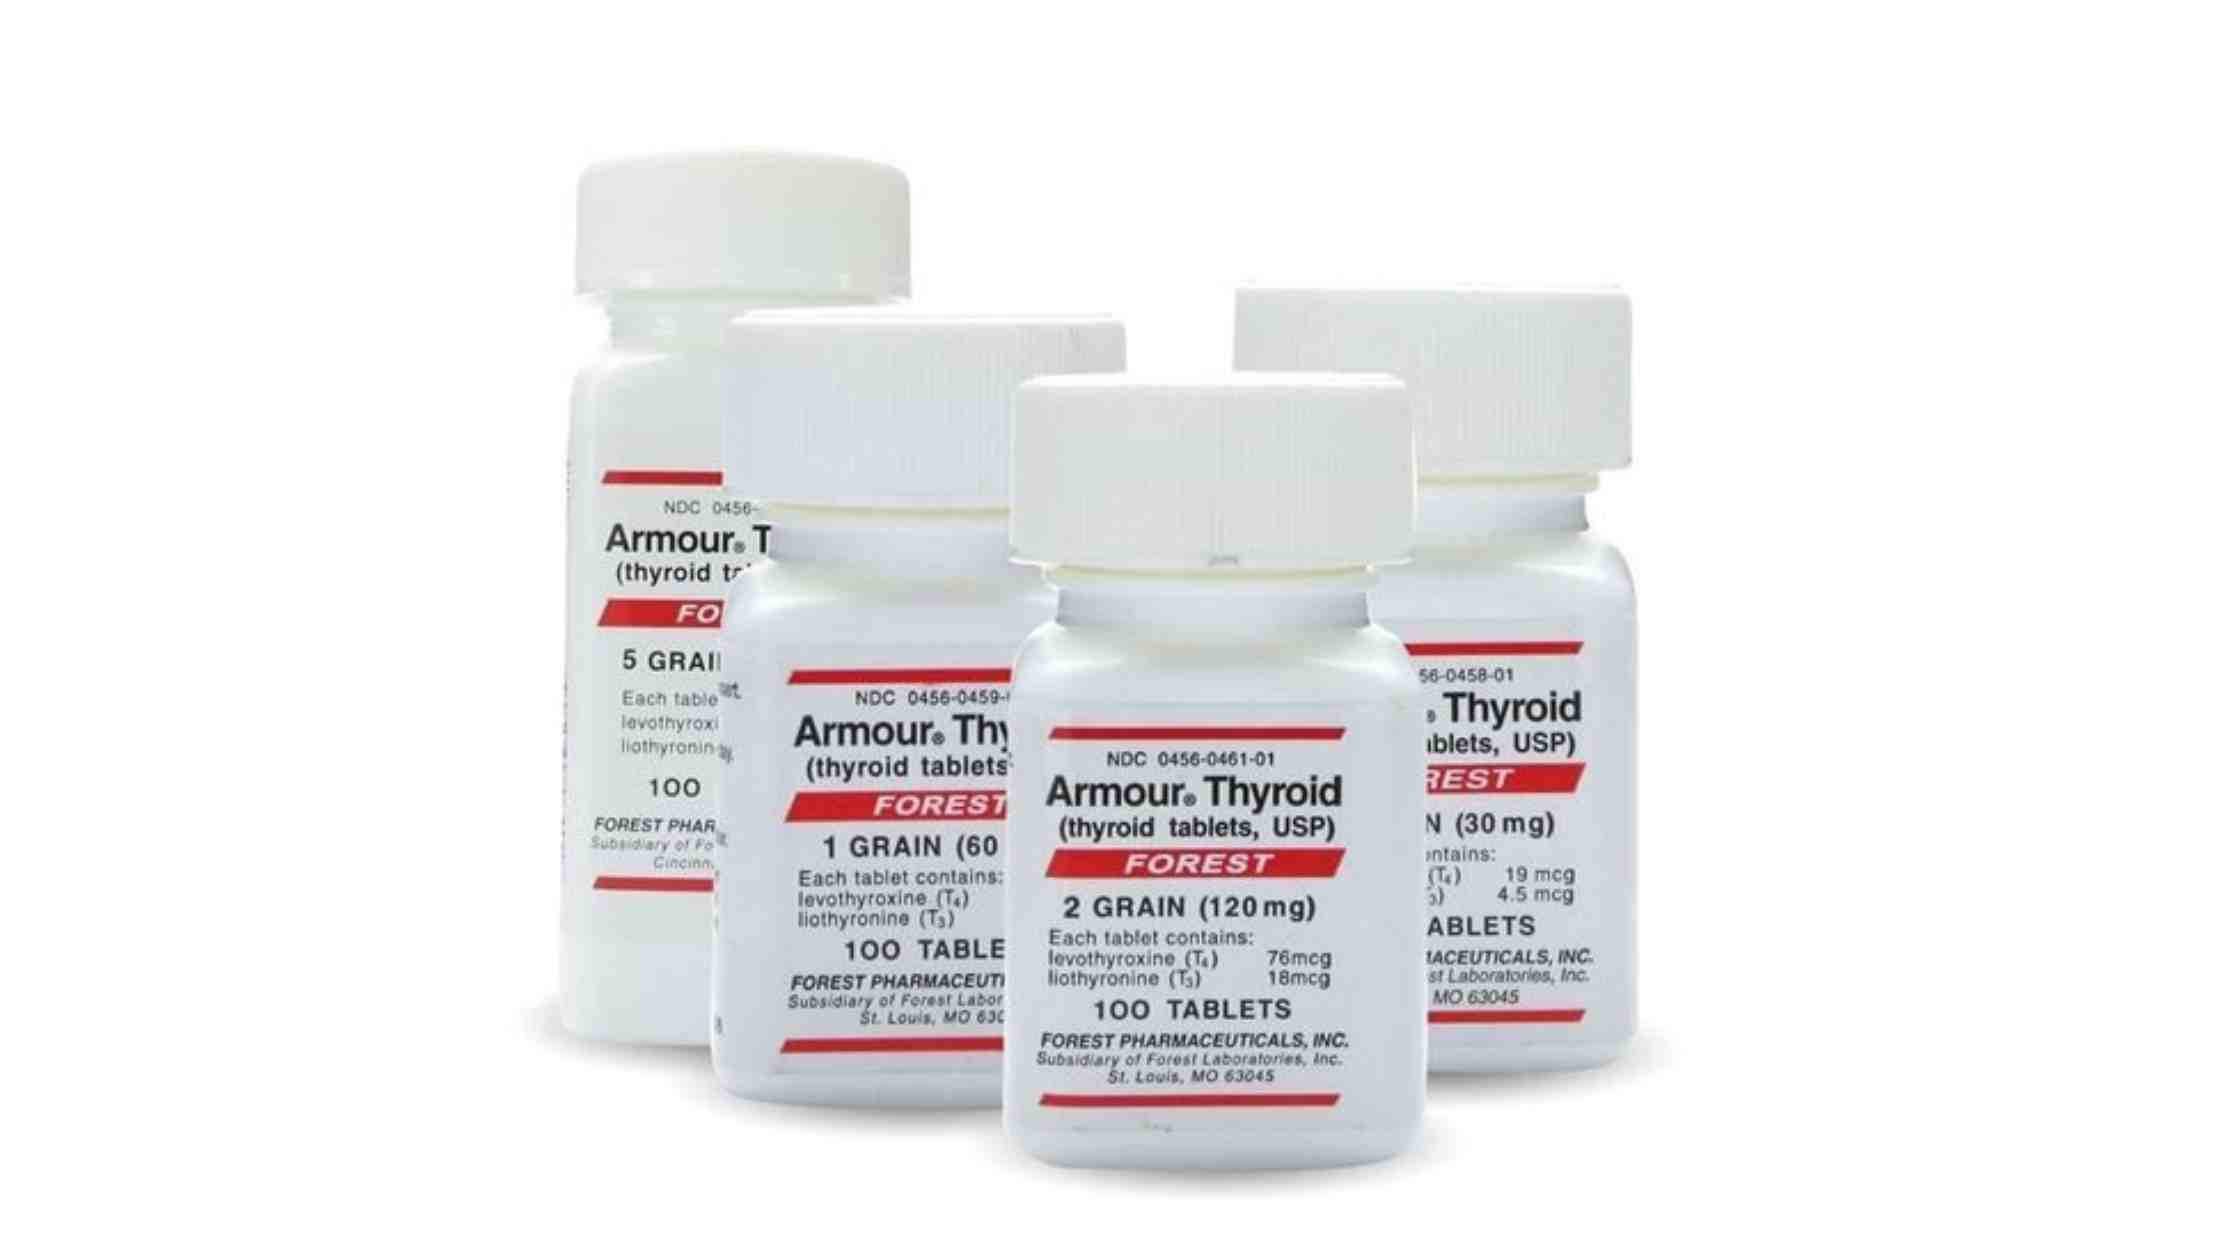 Armour Thyroid discontinued